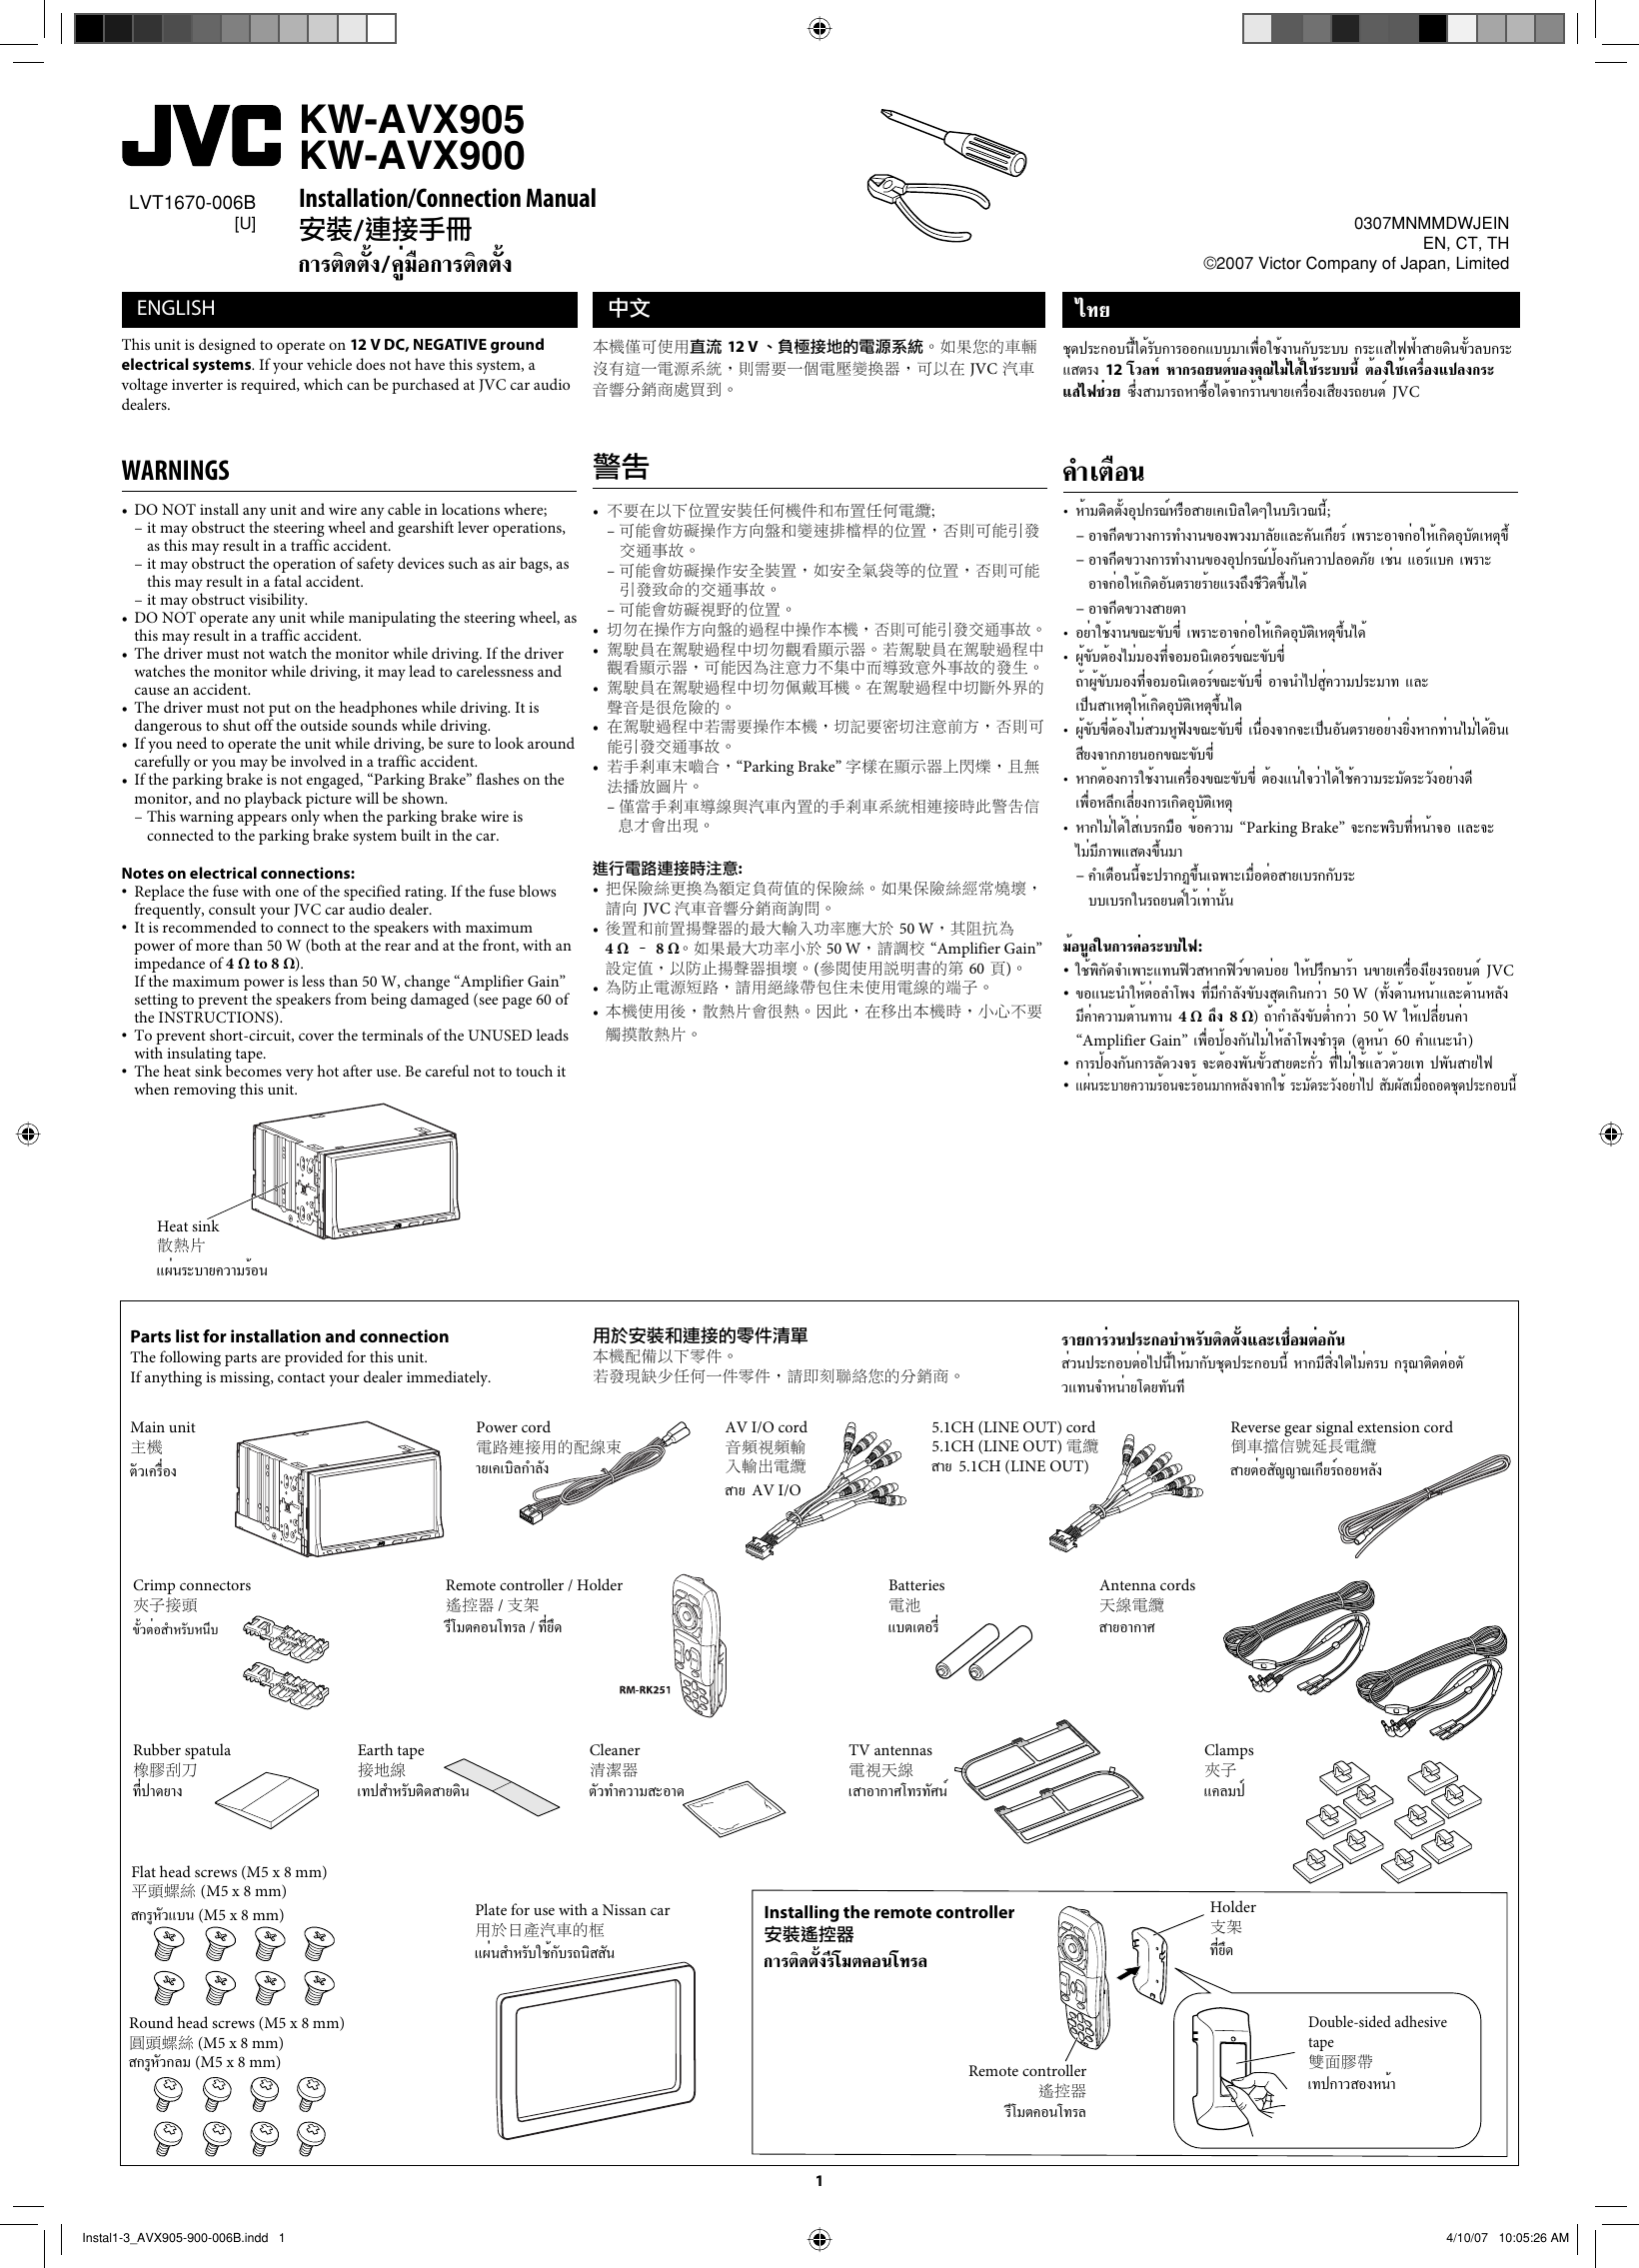 Page 1 of 6 - JVC KW-AVX900U KW-AVX905/KW-AVX900[U] User Manual KW-AVX900U, KW-AVX905U LVT1670-006B